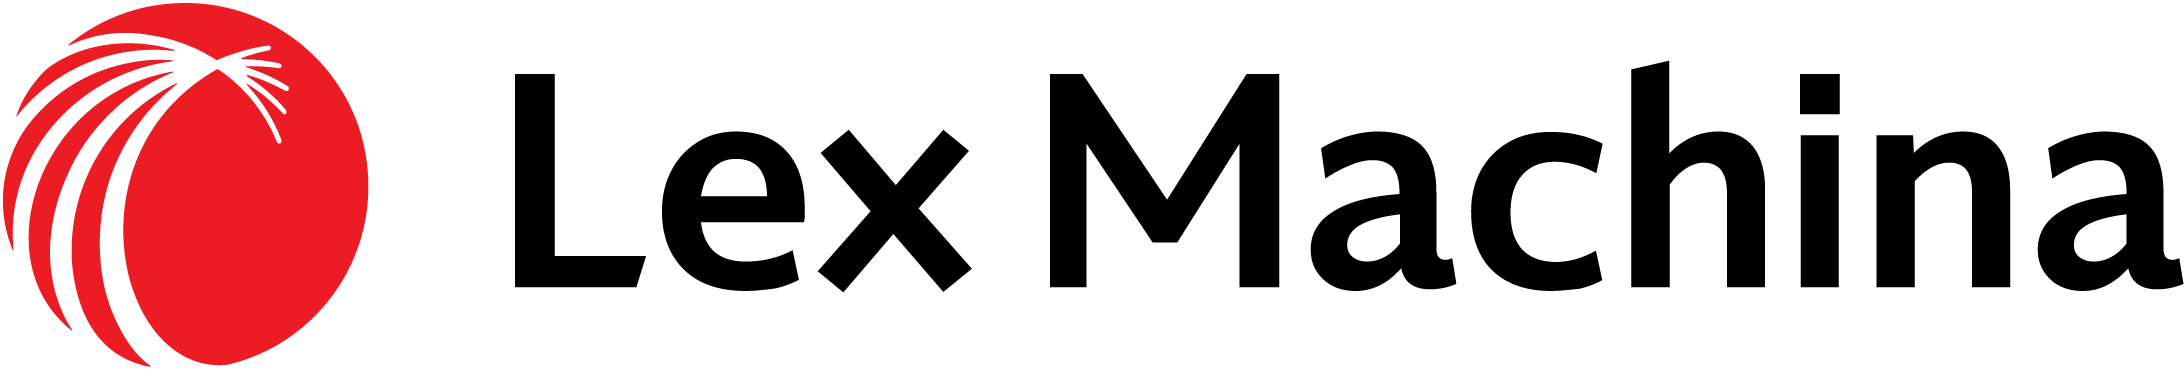 Lex Machina Company Logo